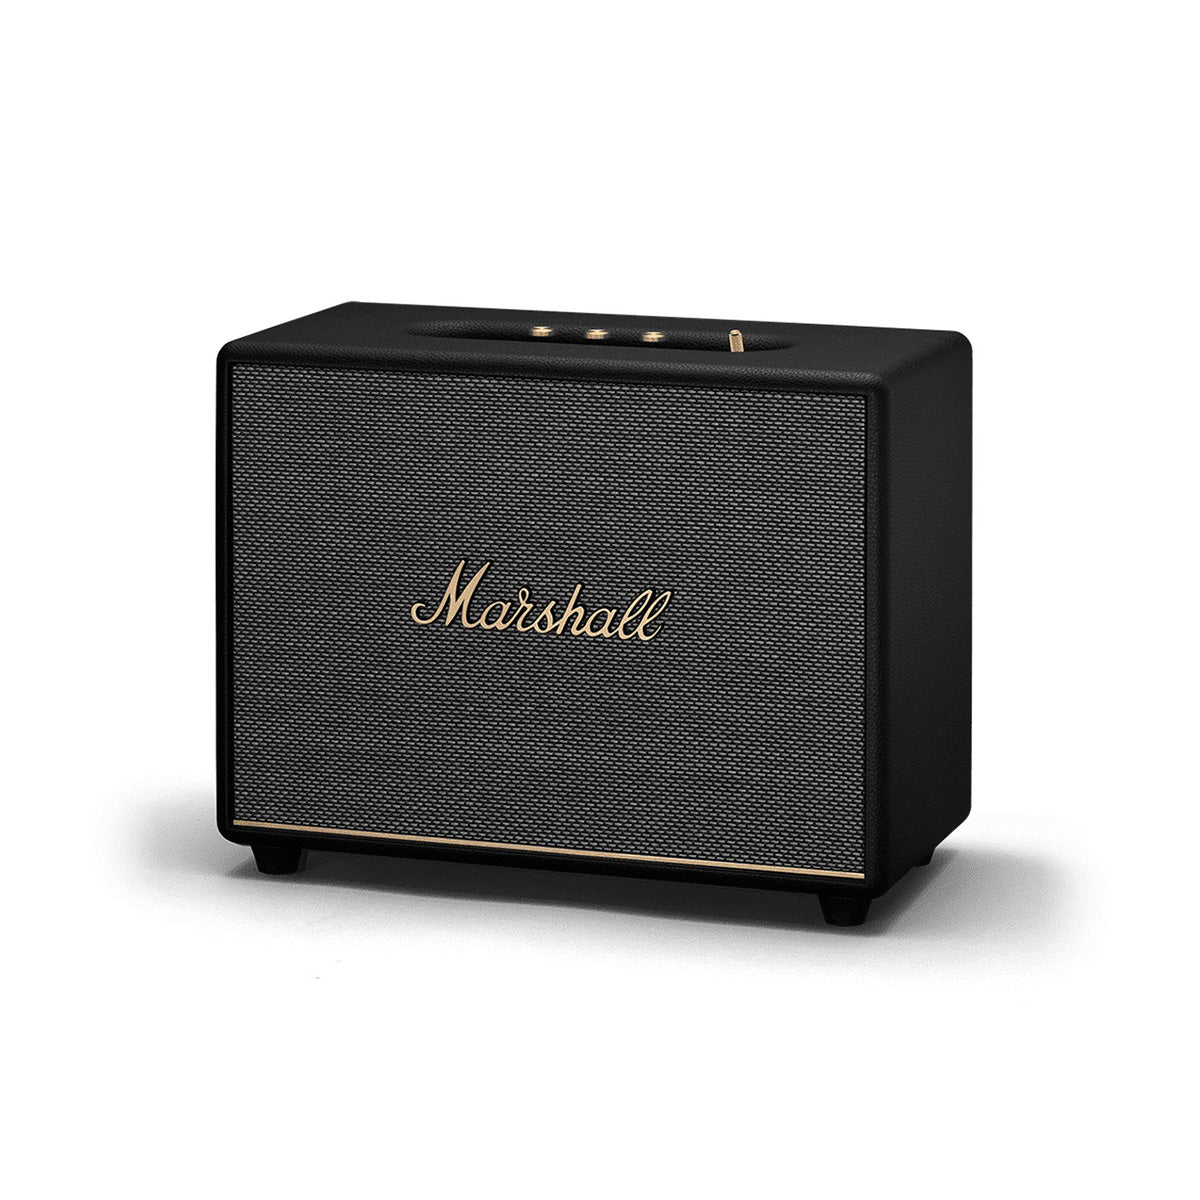 Marshall Woburn lll Wireless Speaker